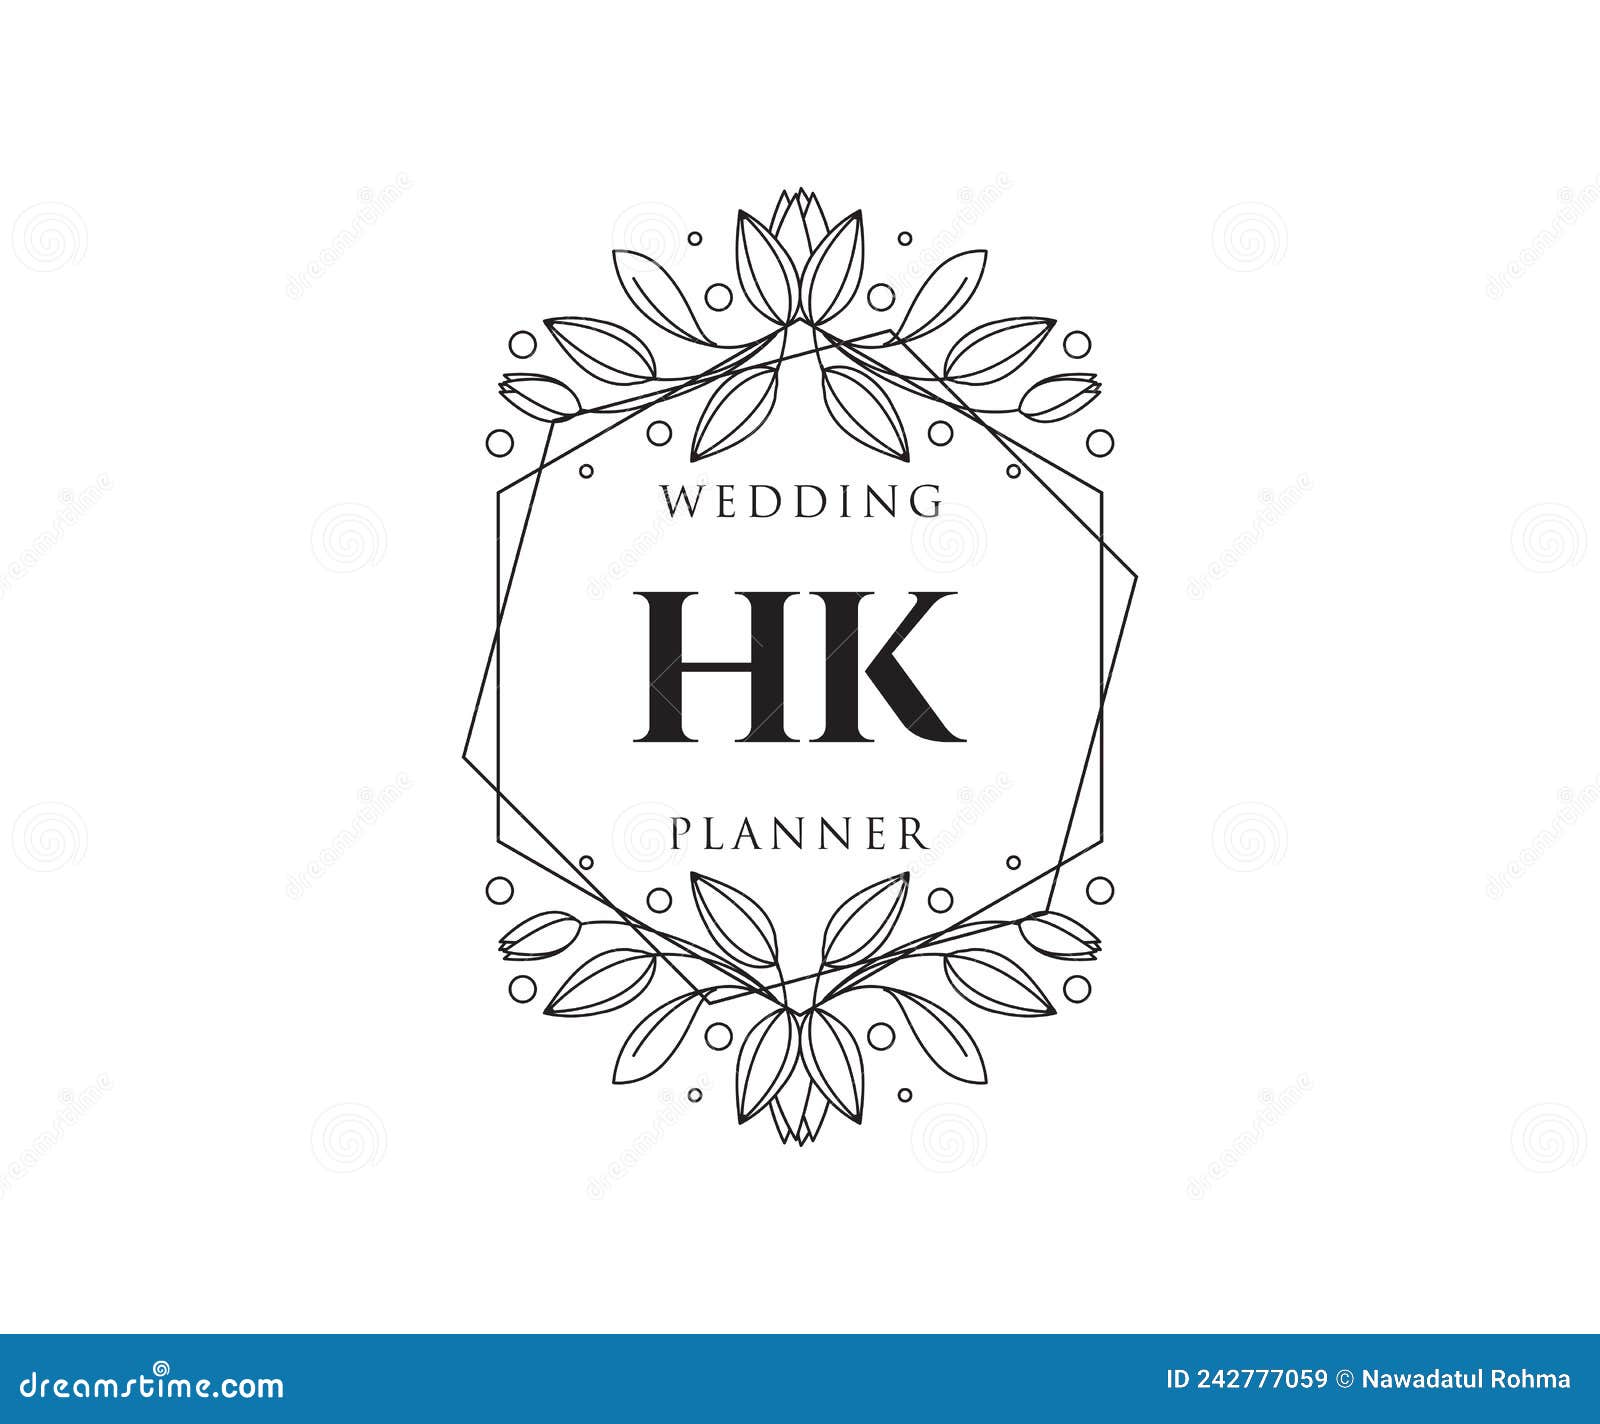 Free Vector  Hand drawn wedding monogram logo collection